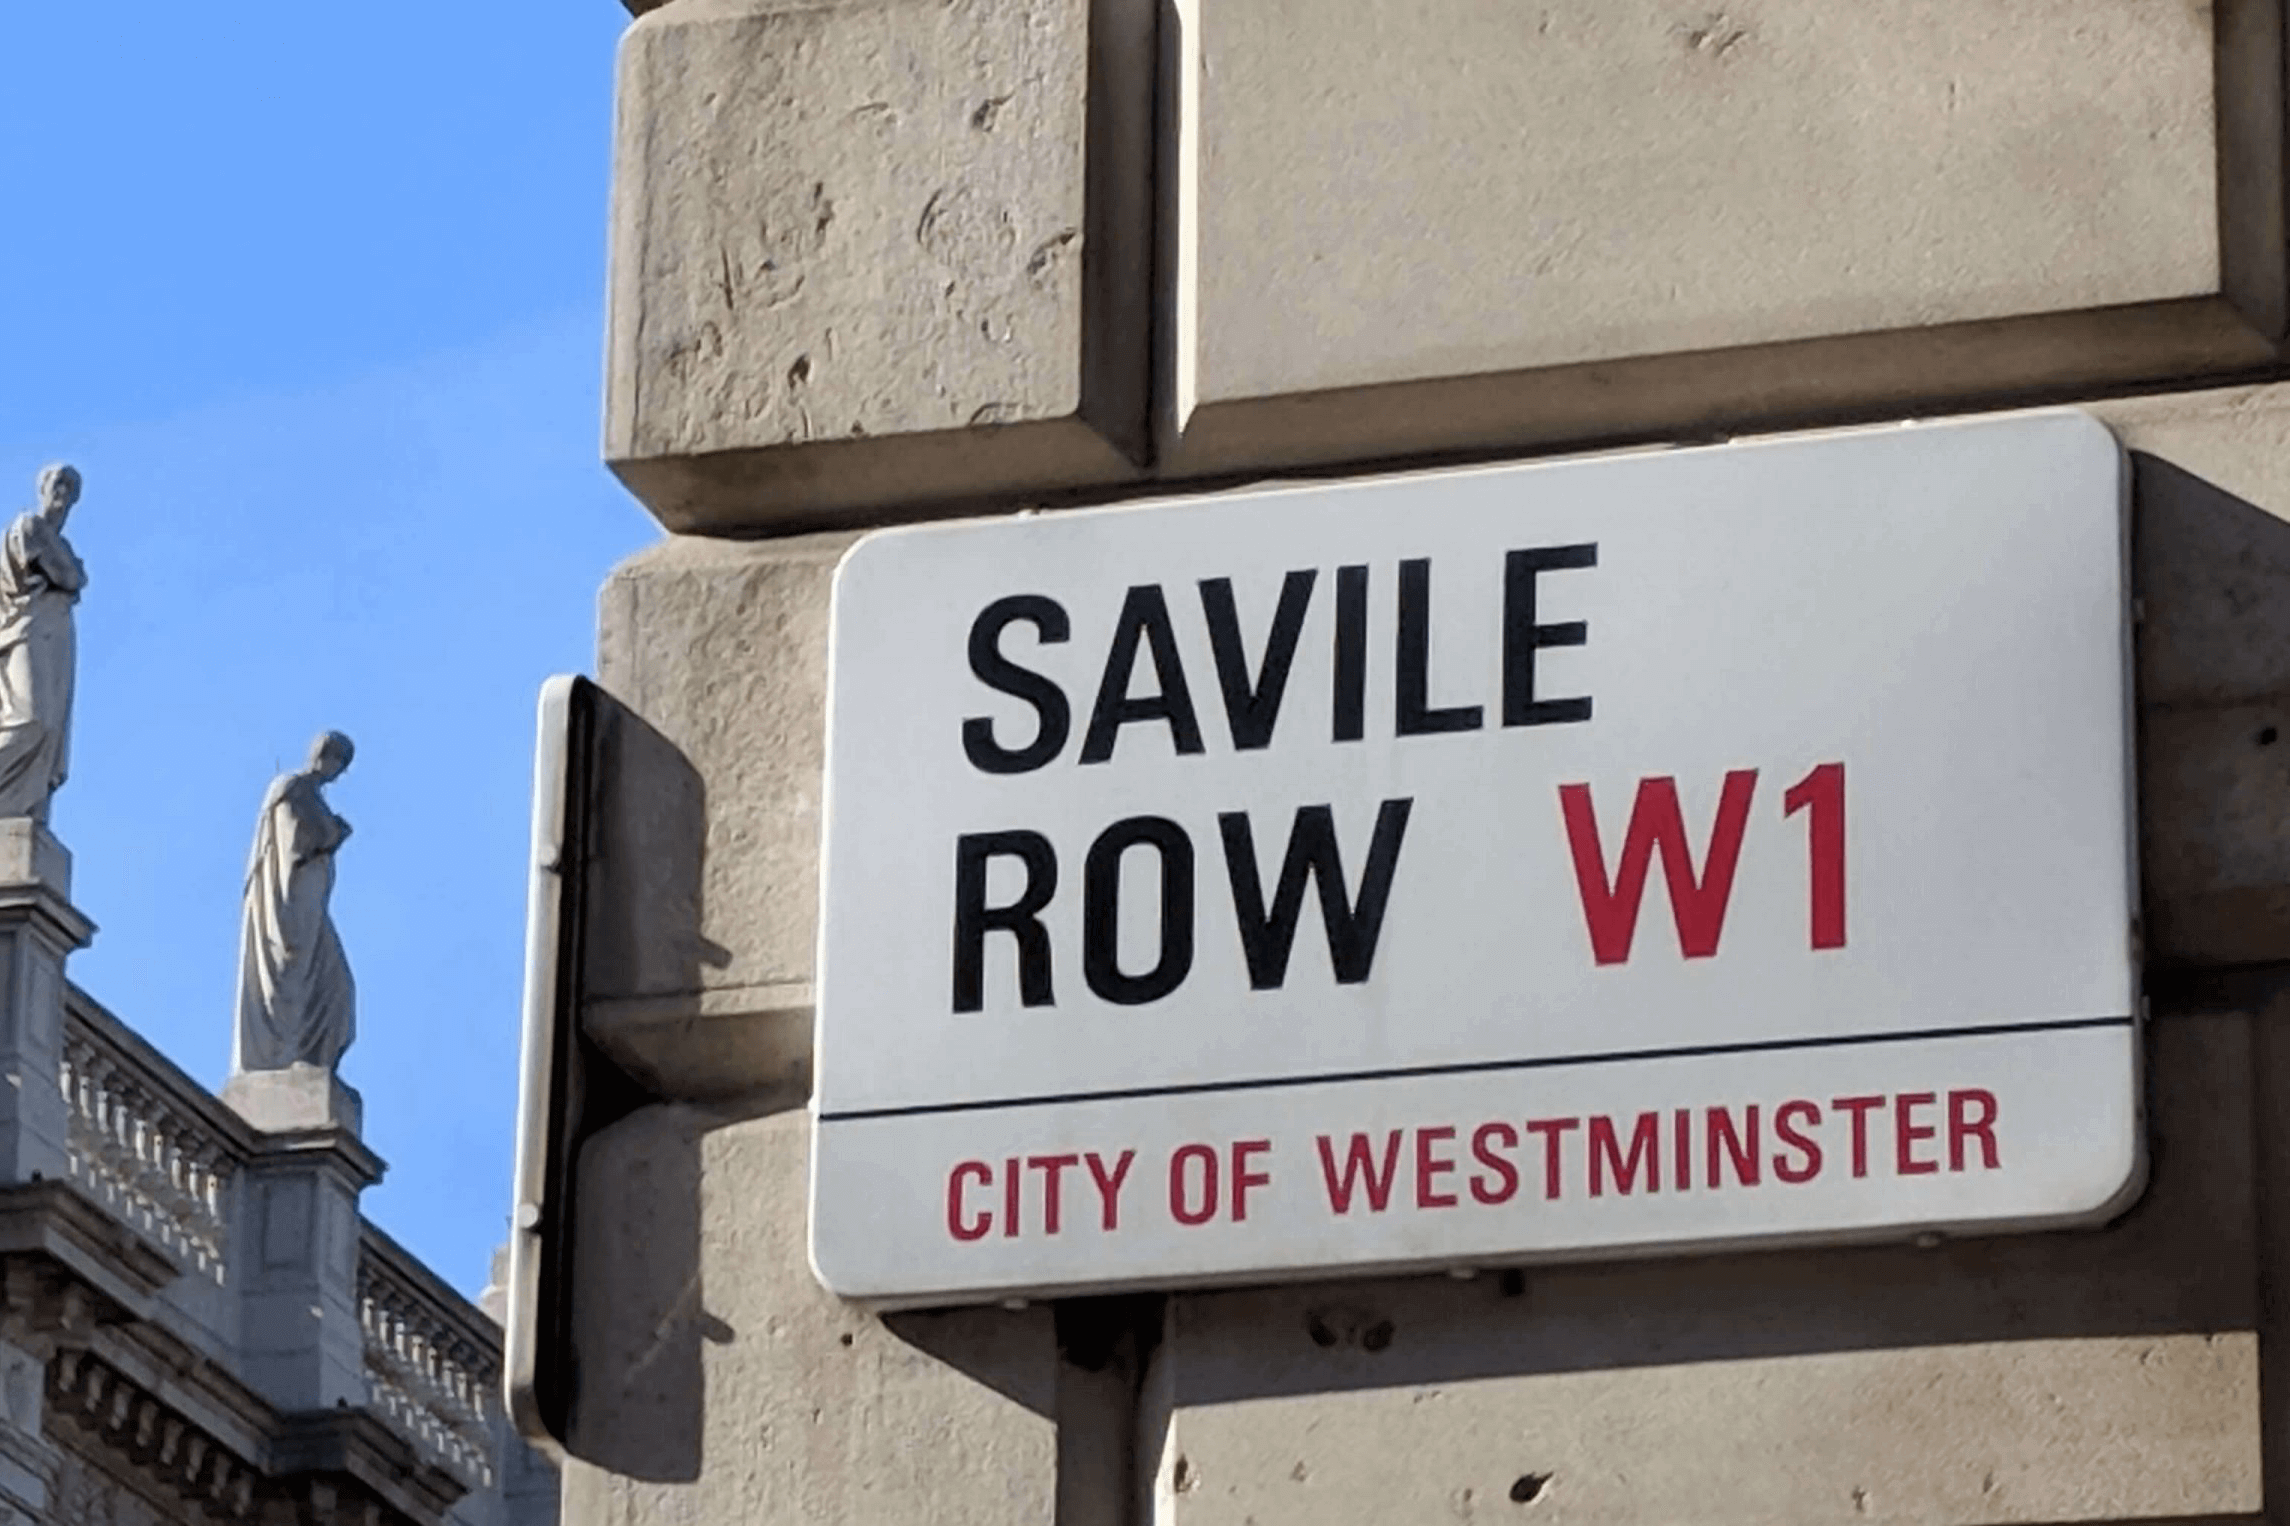 Savile Row bespoke suits